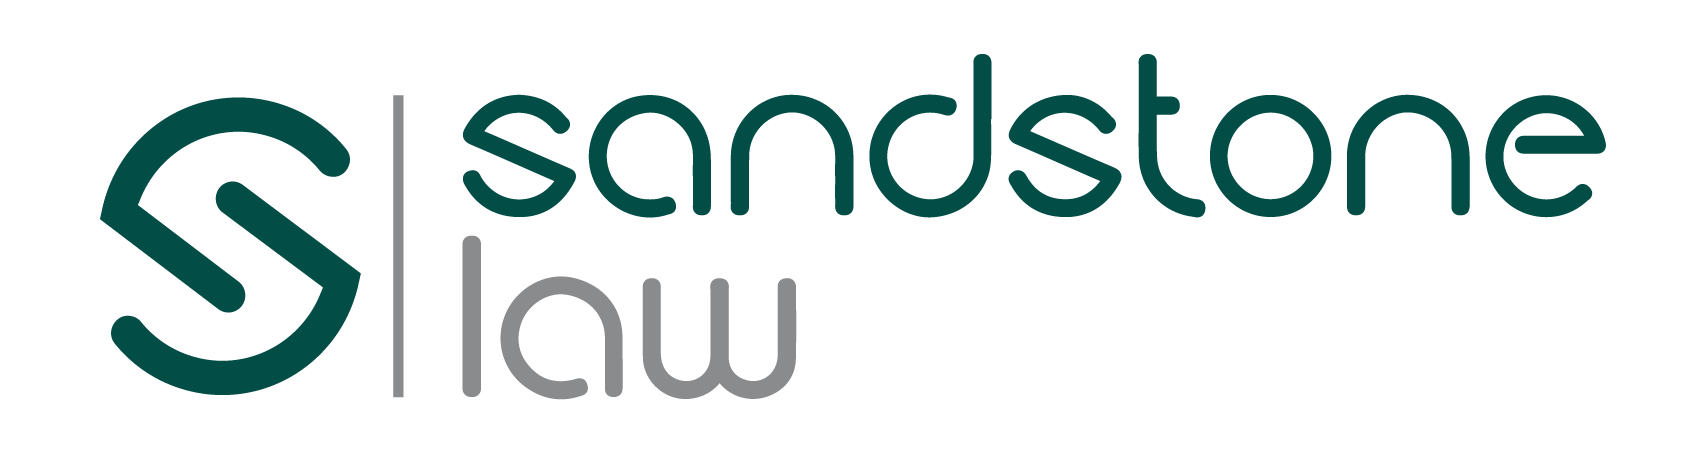 Sandstone logo - final horizontal transparent